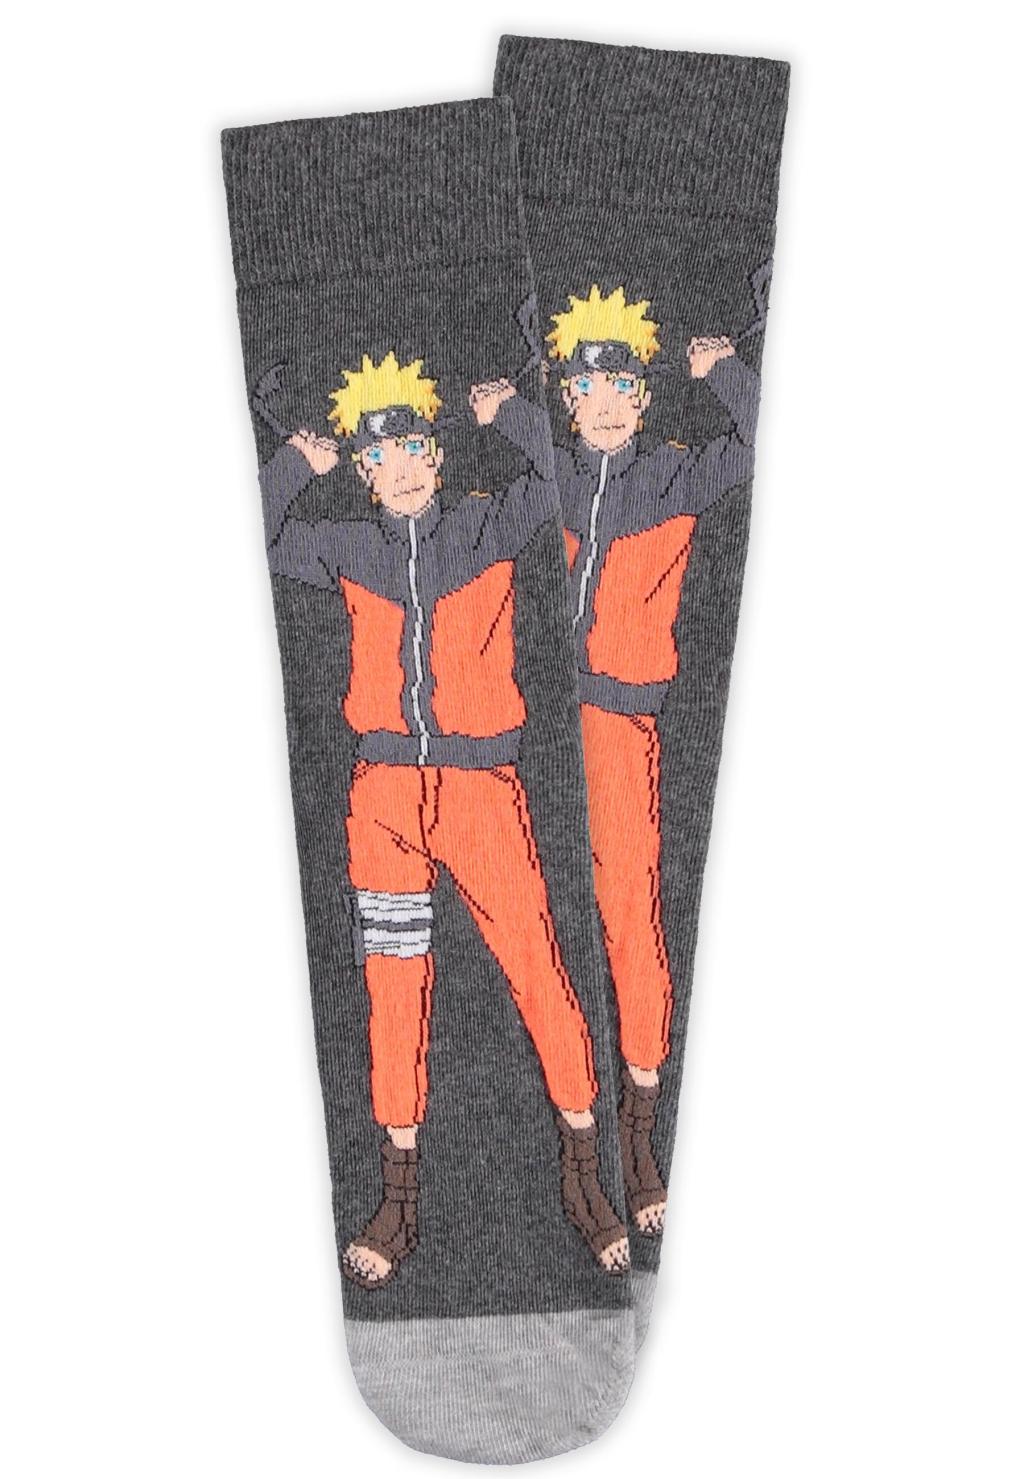 NARUTO SHIPPUDEN - Naruto - Pack of 3 pairs of socks (T39-42)